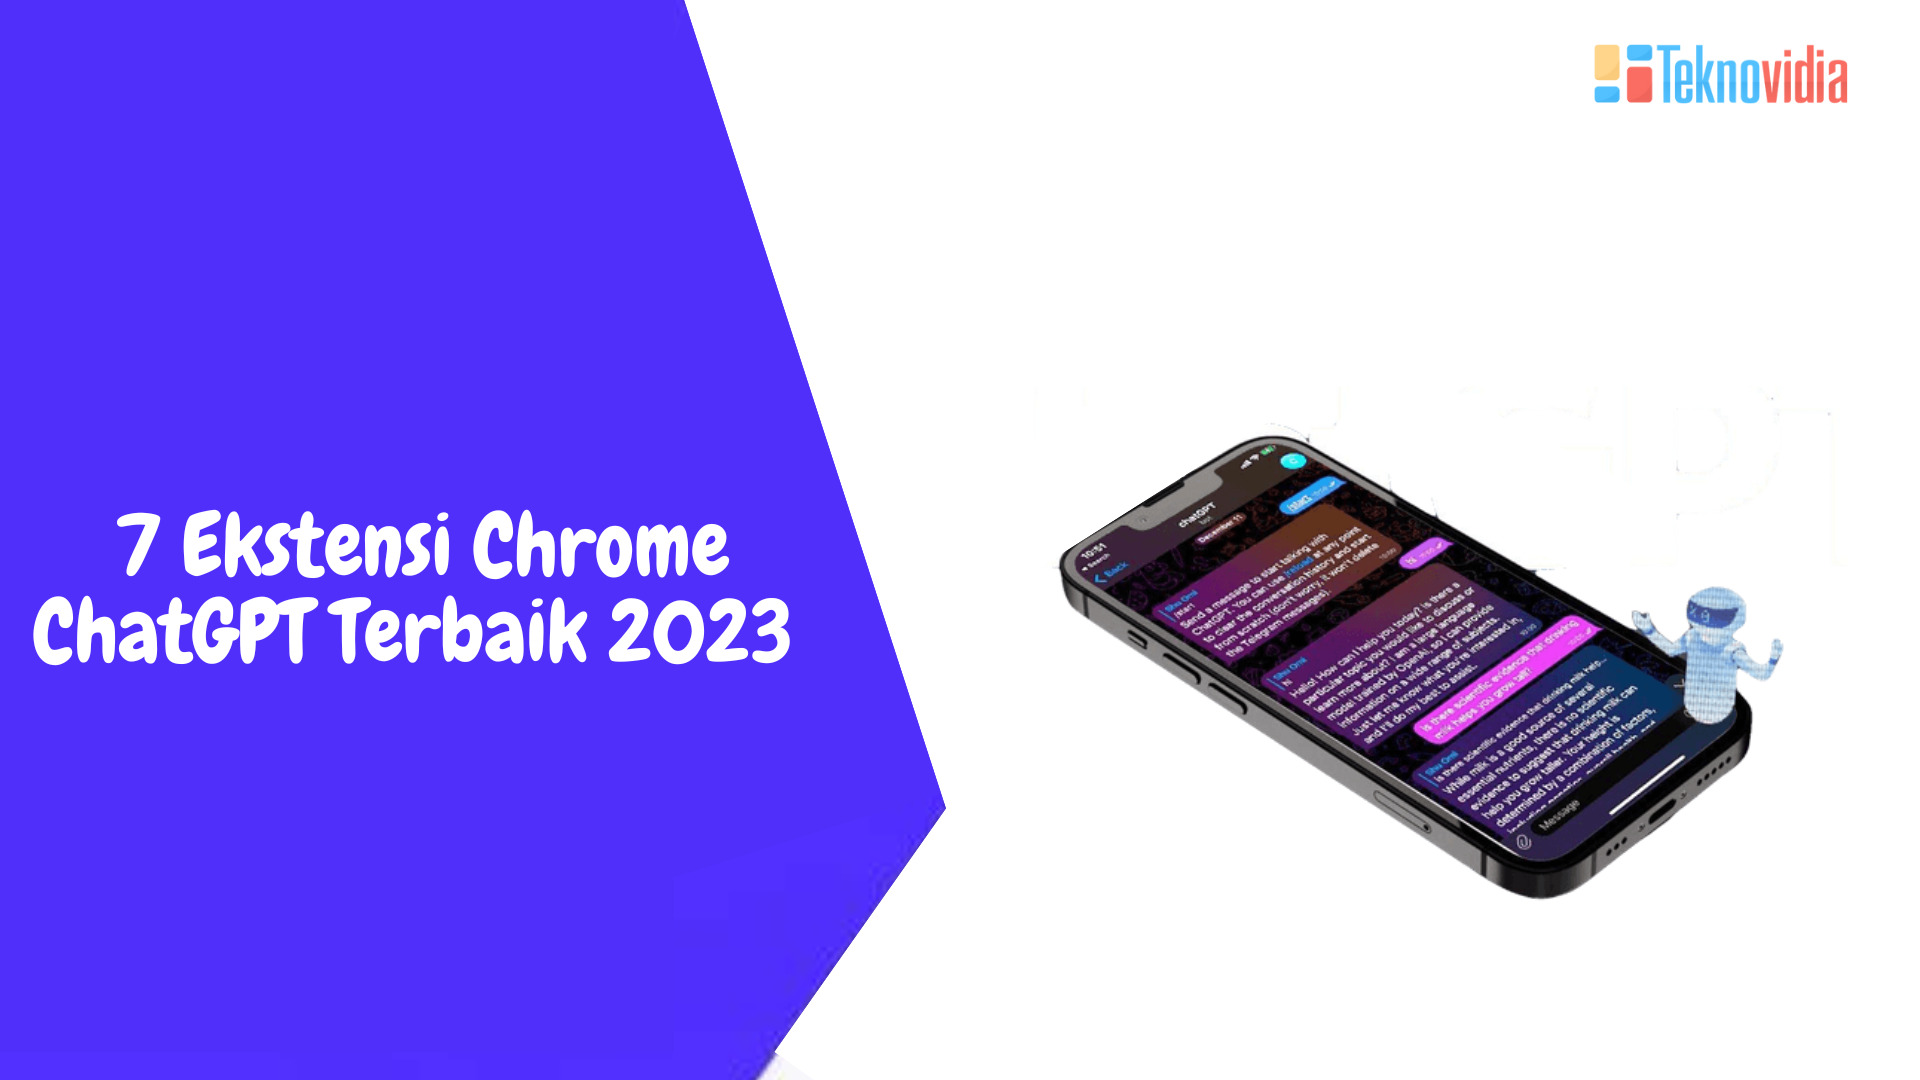 7 Ekstensi Chrome ChatGPT Terbaik 2023